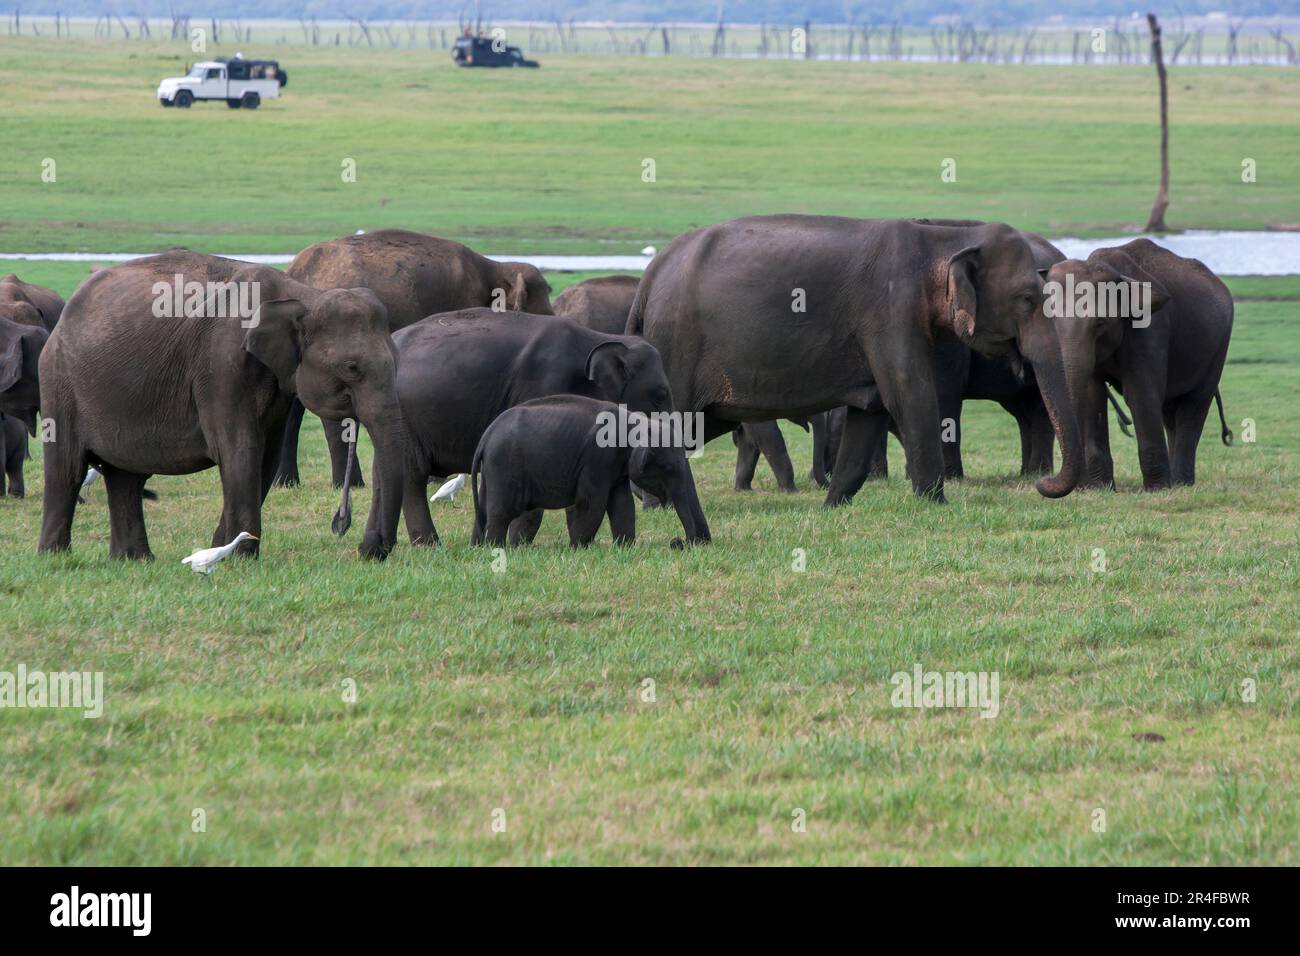 A herd of wild elephants graze on grassland adjacent to the tank (reservoir) at Kaudulla National Park at Galoya in central Sri Lanka. Stock Photo